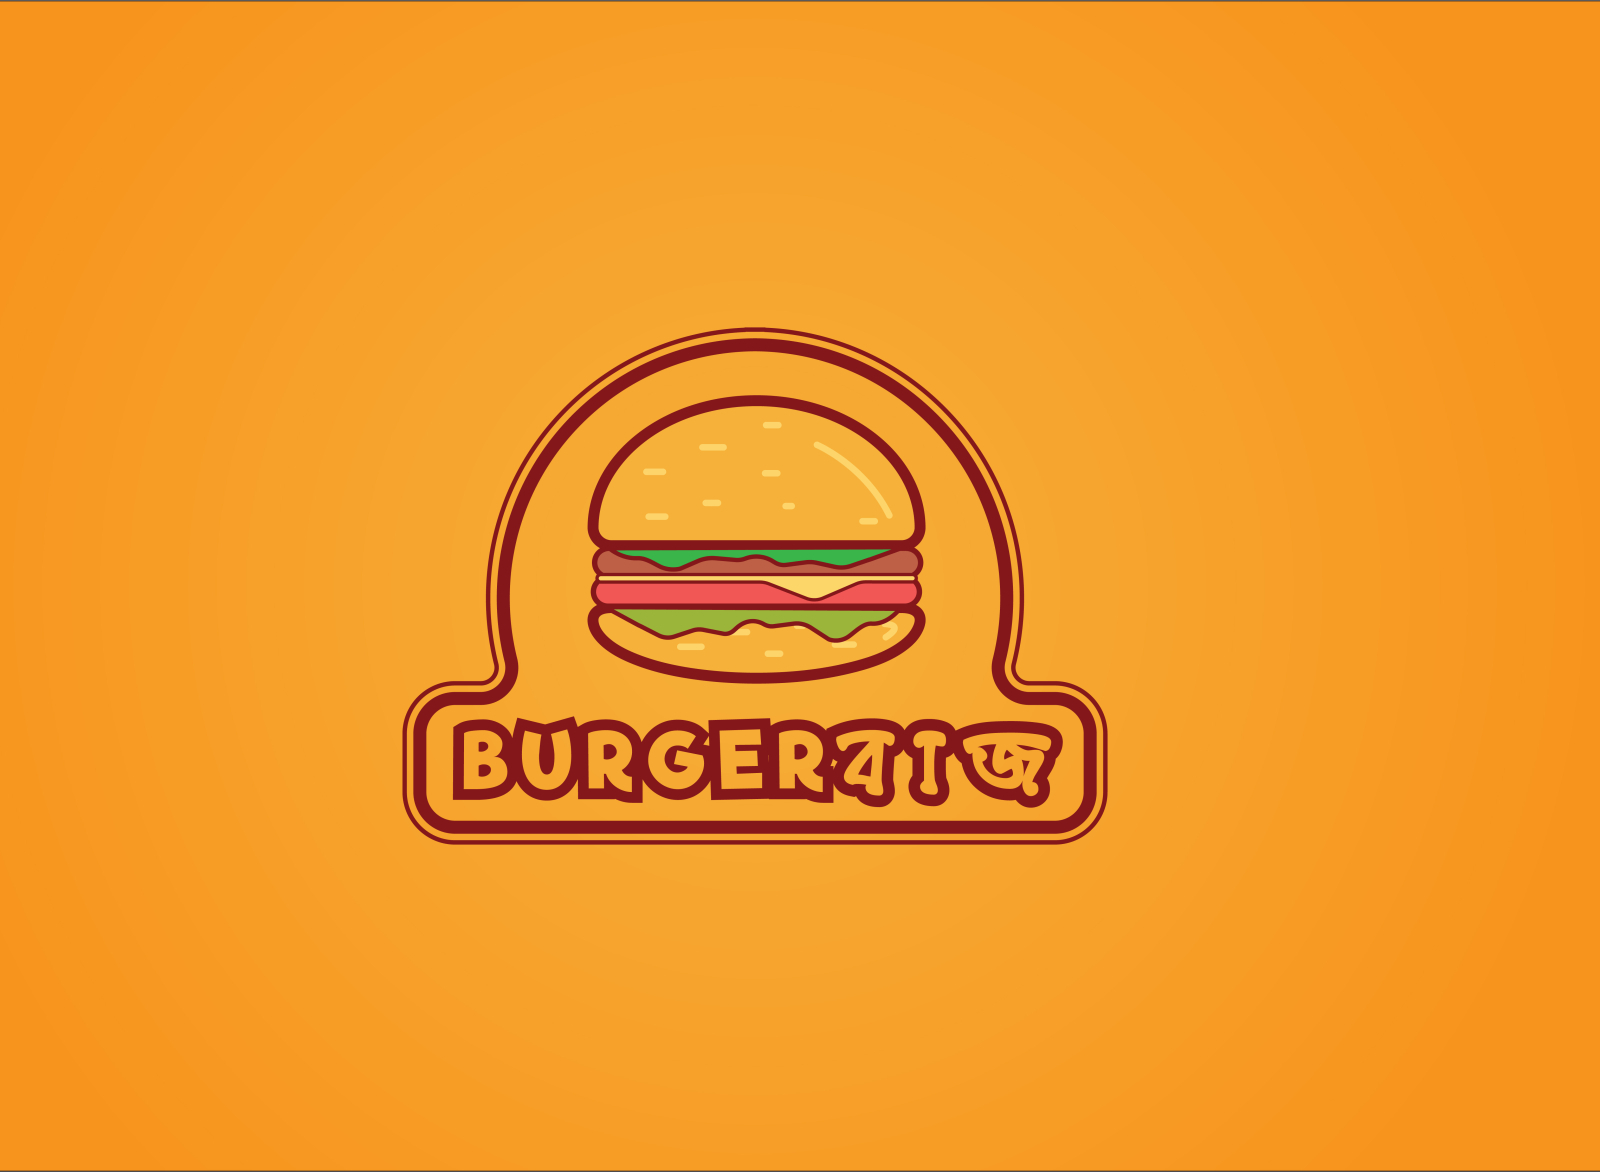 Burgerbaj logo by Md. Walid islam on Dribbble